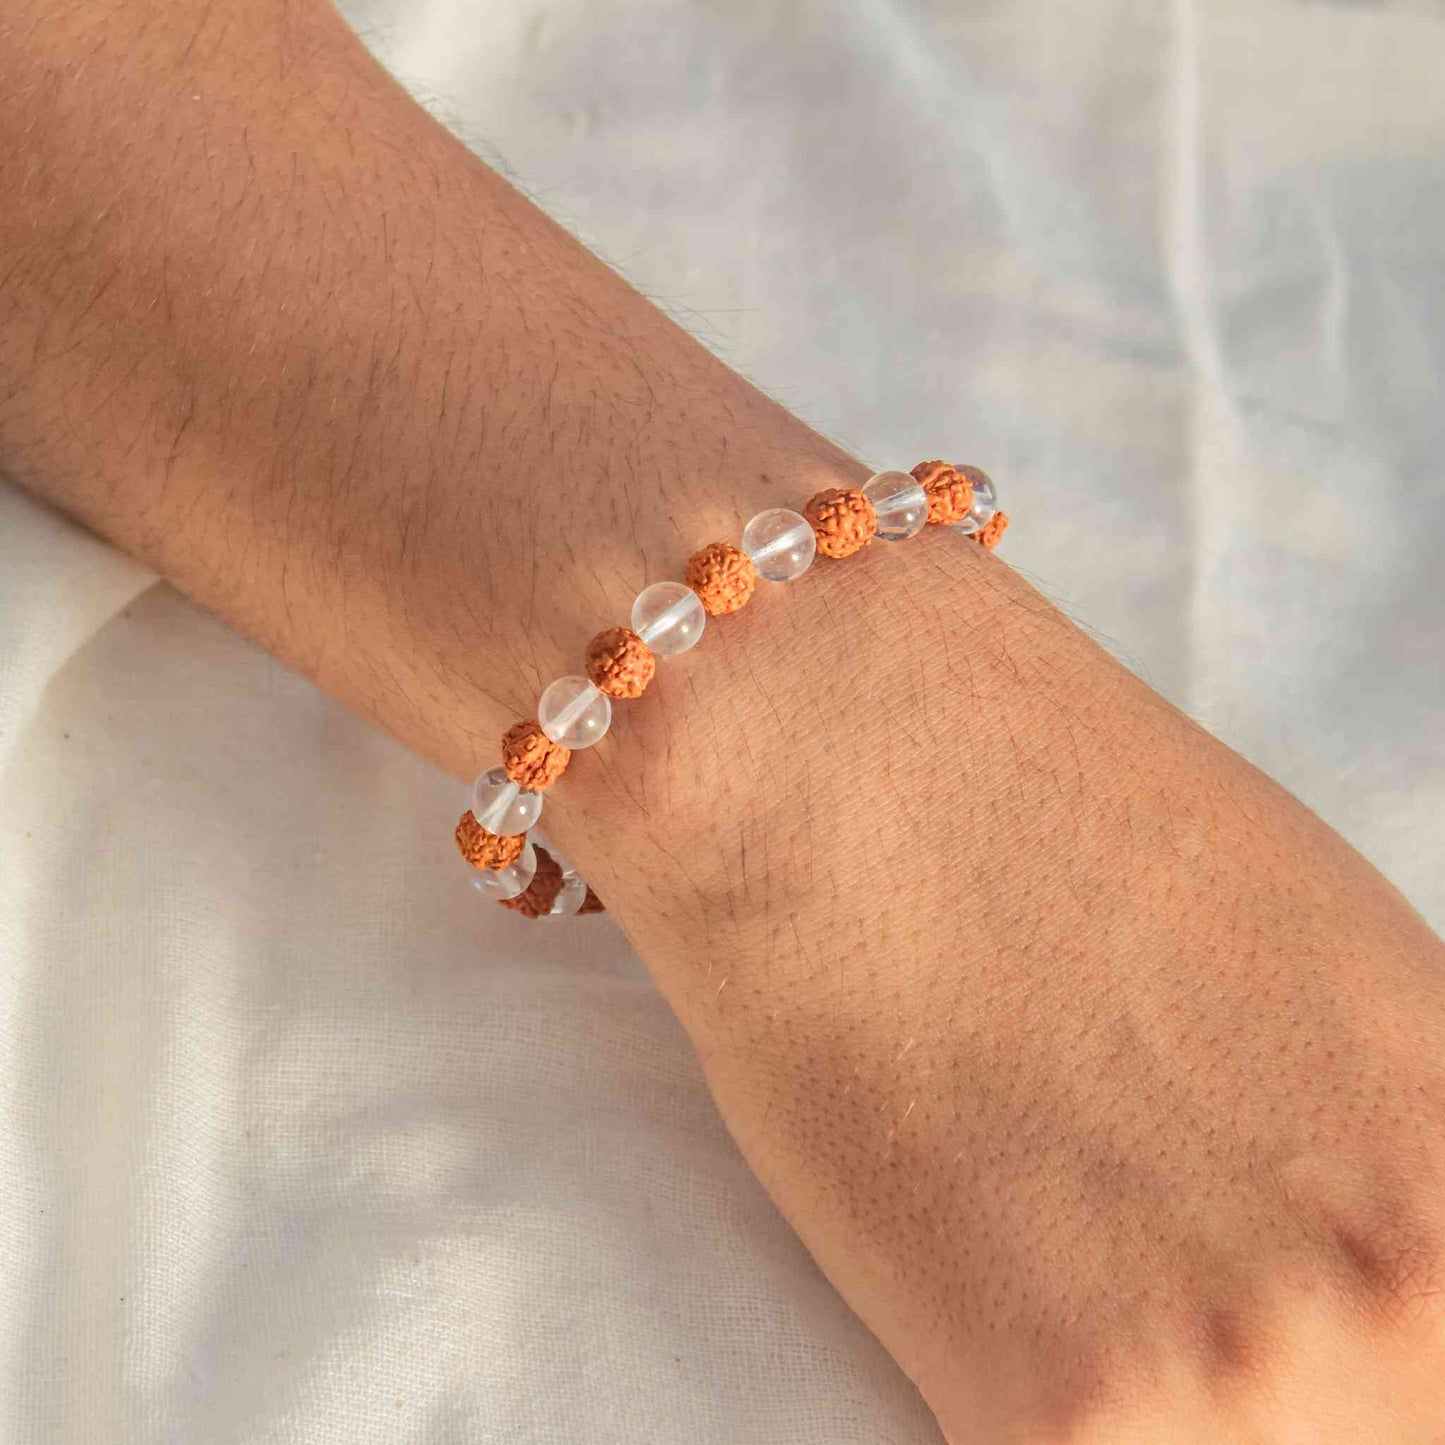 Rudraksha and Clear Quartz harmonious bracelet